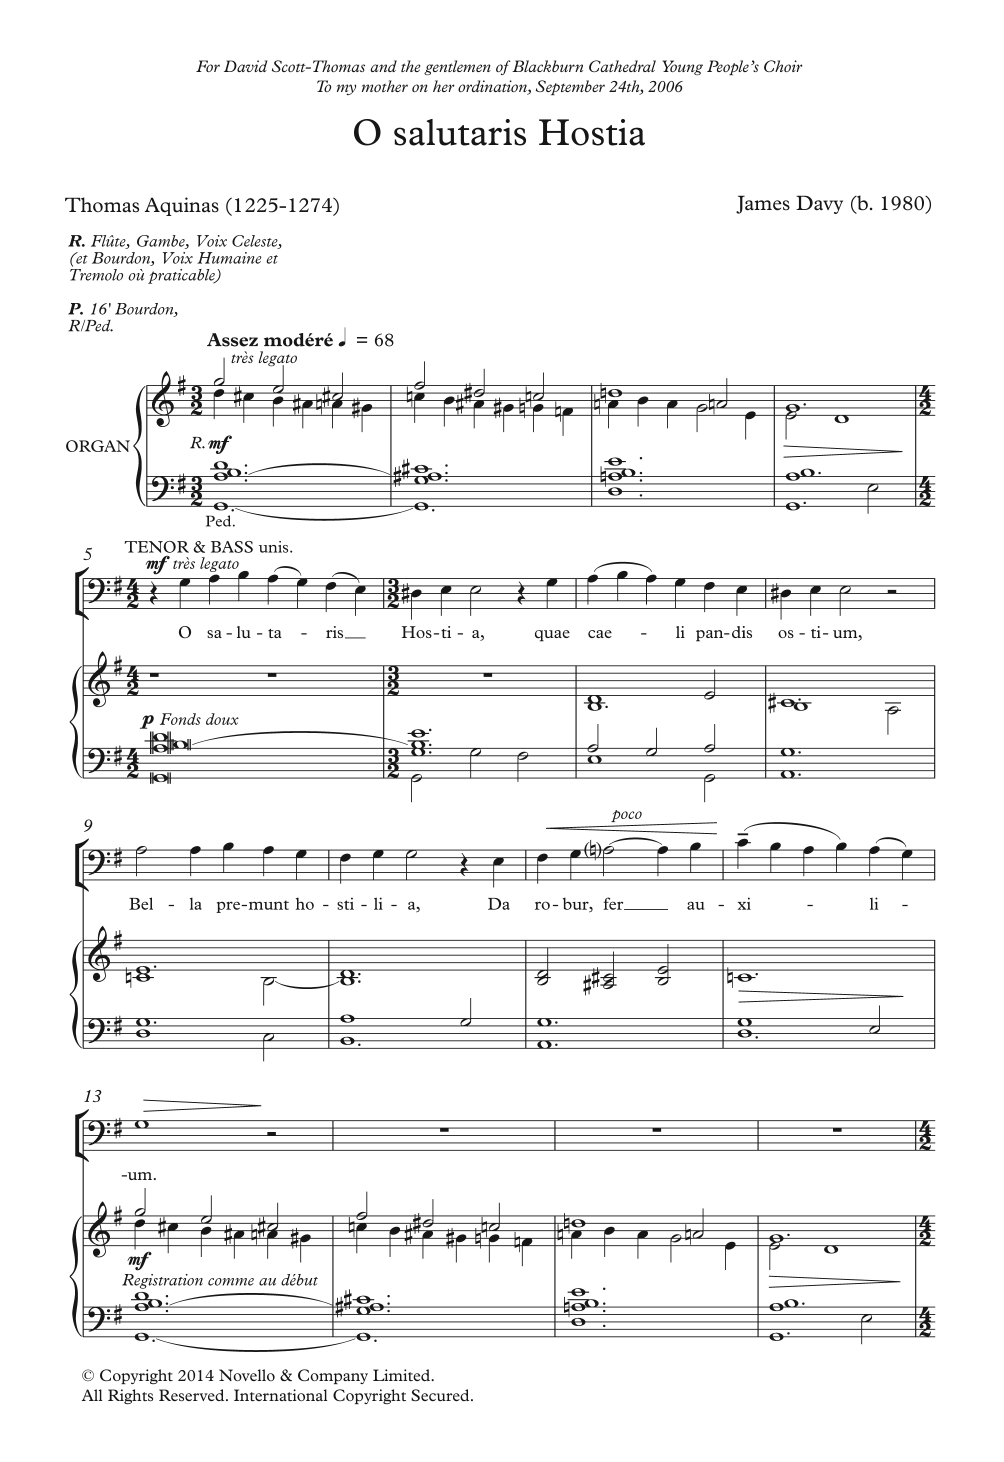 James Davy O Salutaris Hostia Sheet Music Notes & Chords for SATB - Download or Print PDF